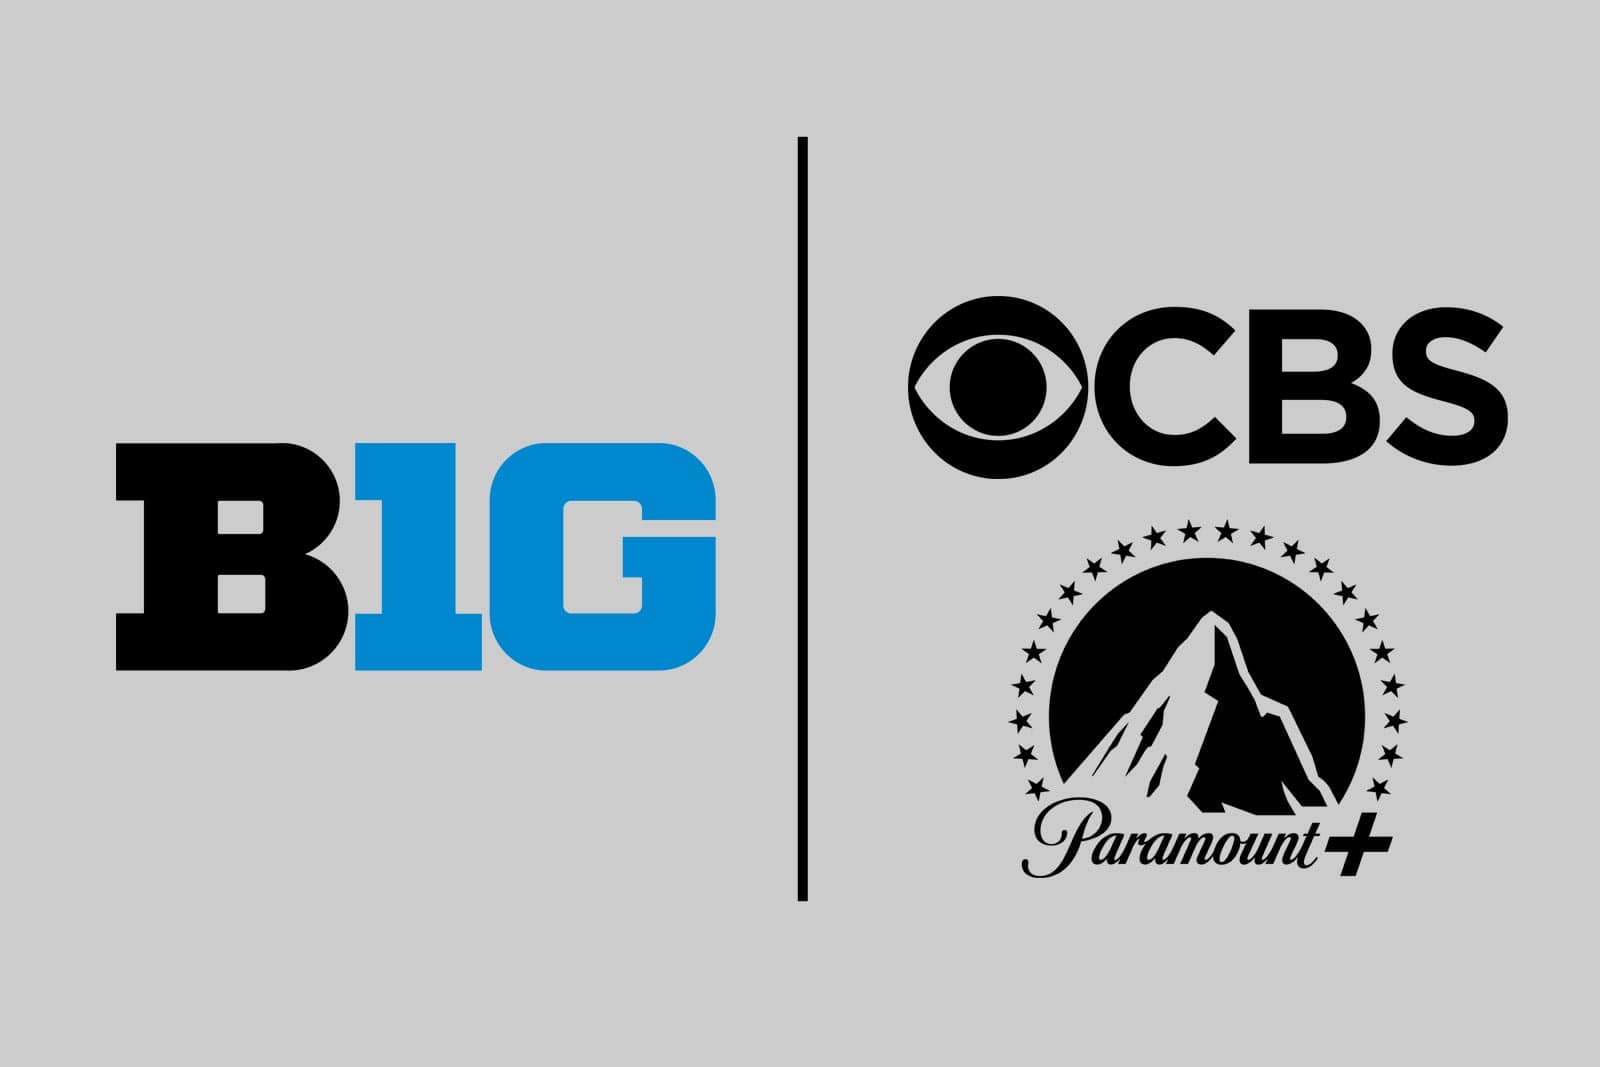 Big Ten - CBS/Paramount+